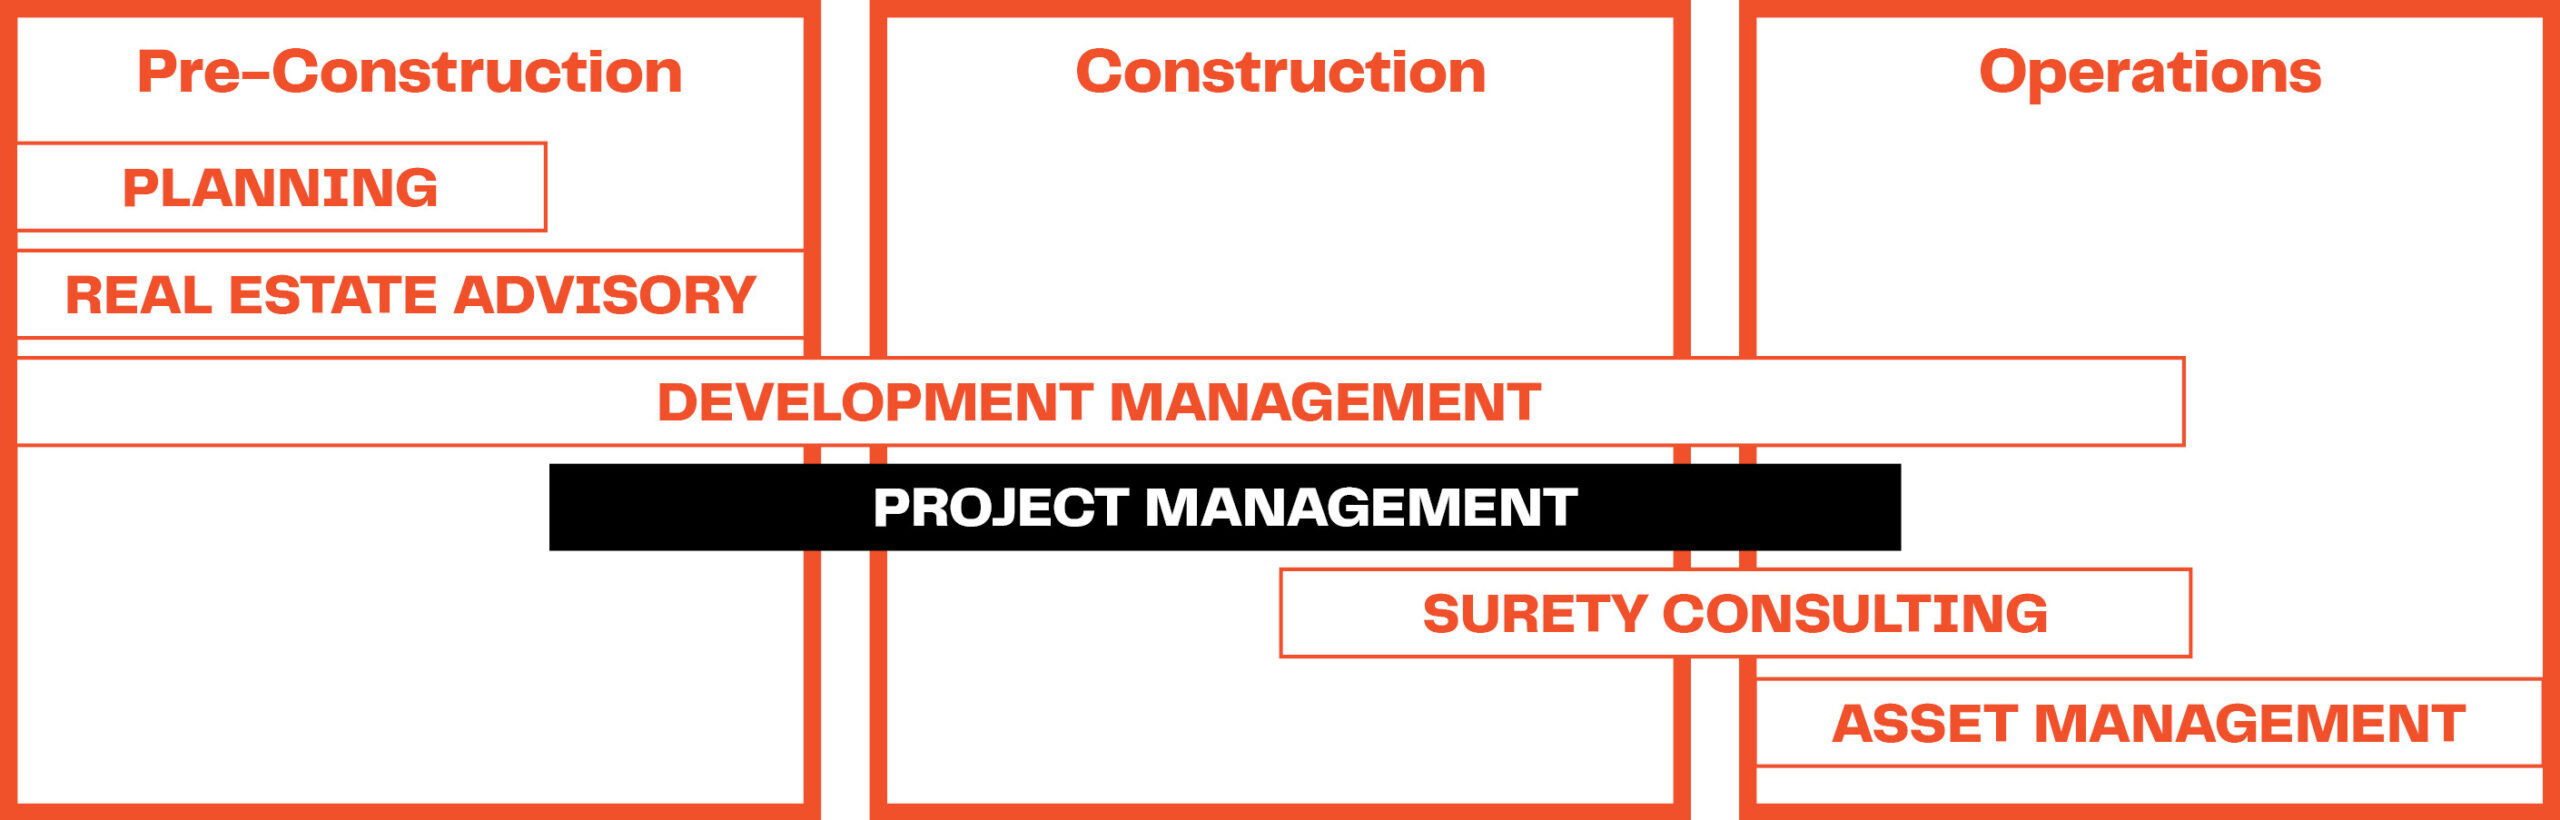 Services Timeline - Project Management